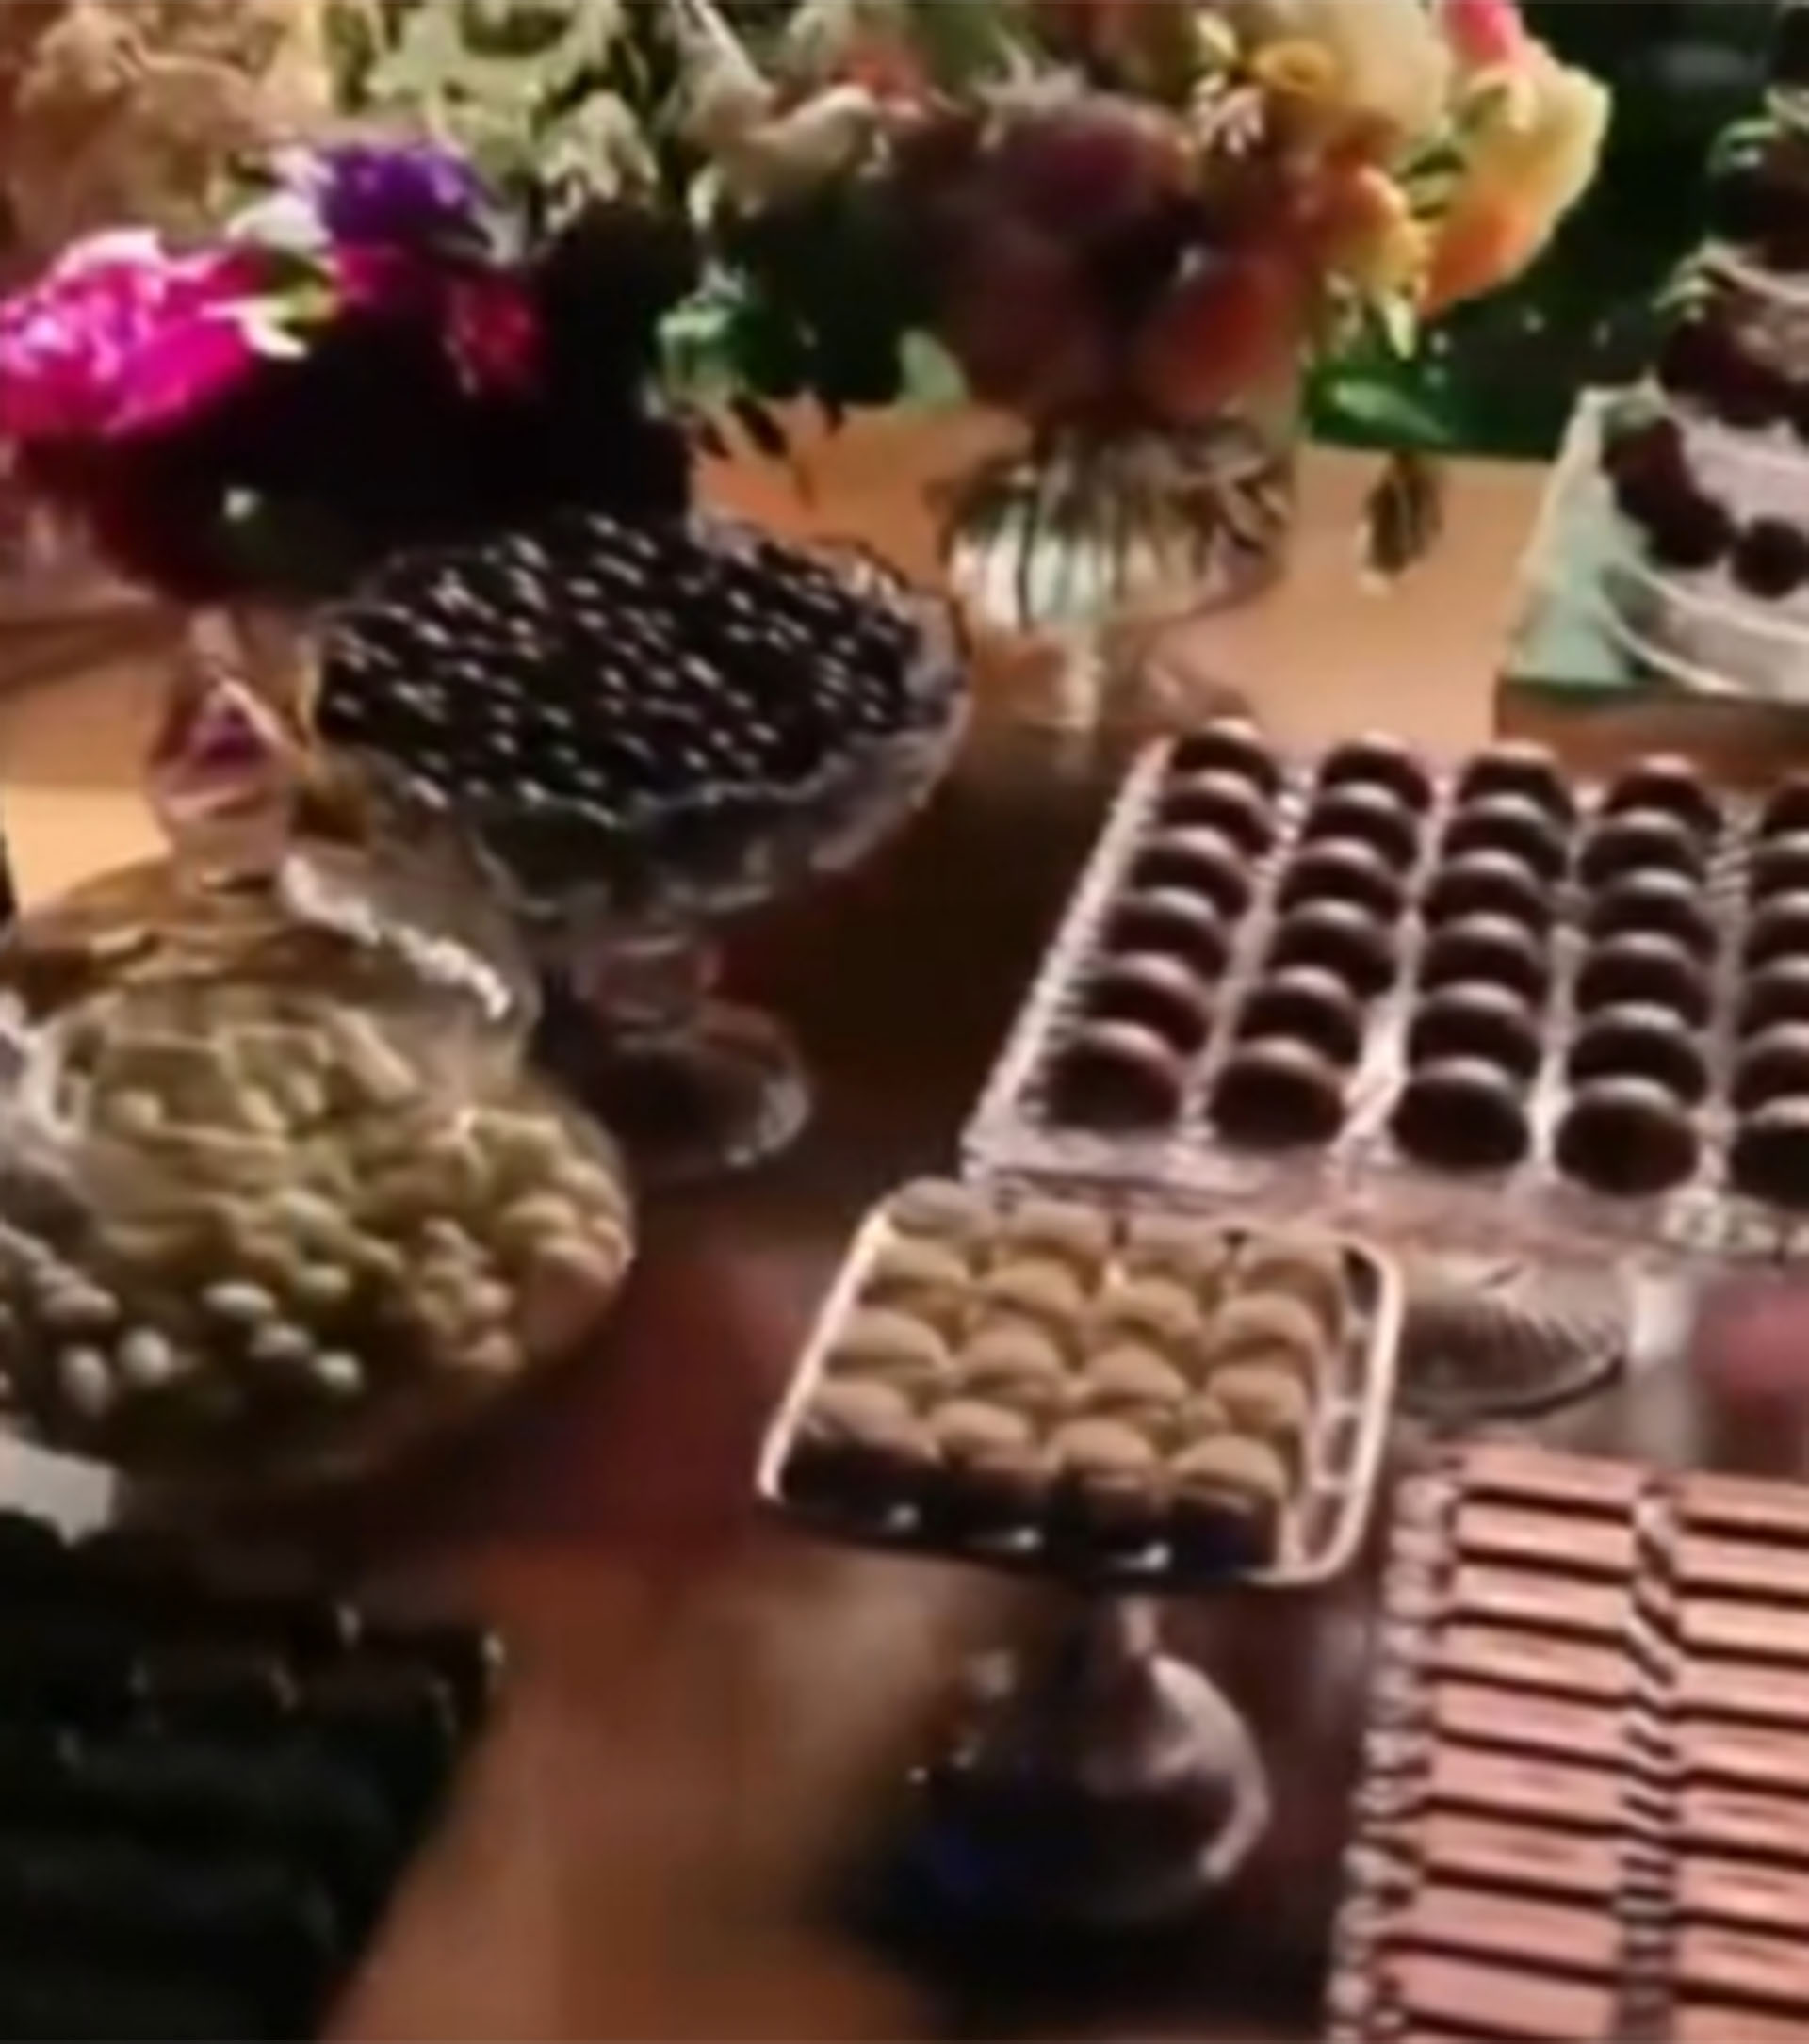 The table of chocolates and chocolates for Yanina Latorre's birthday